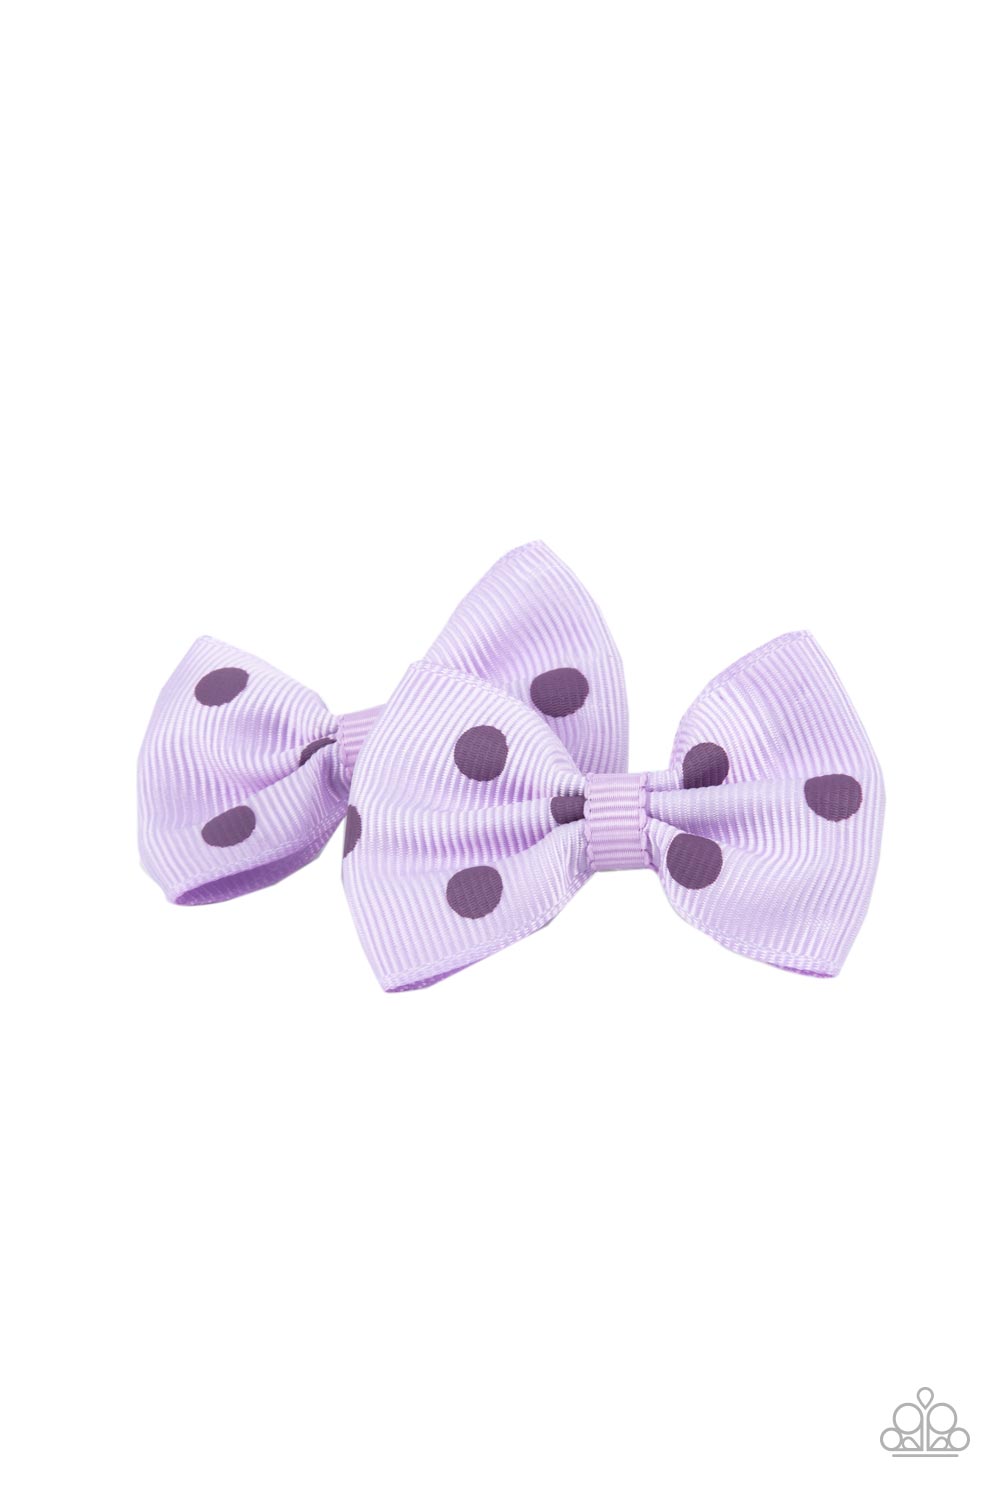 Polka Dot Drama - purple - Paparazzi hair clip